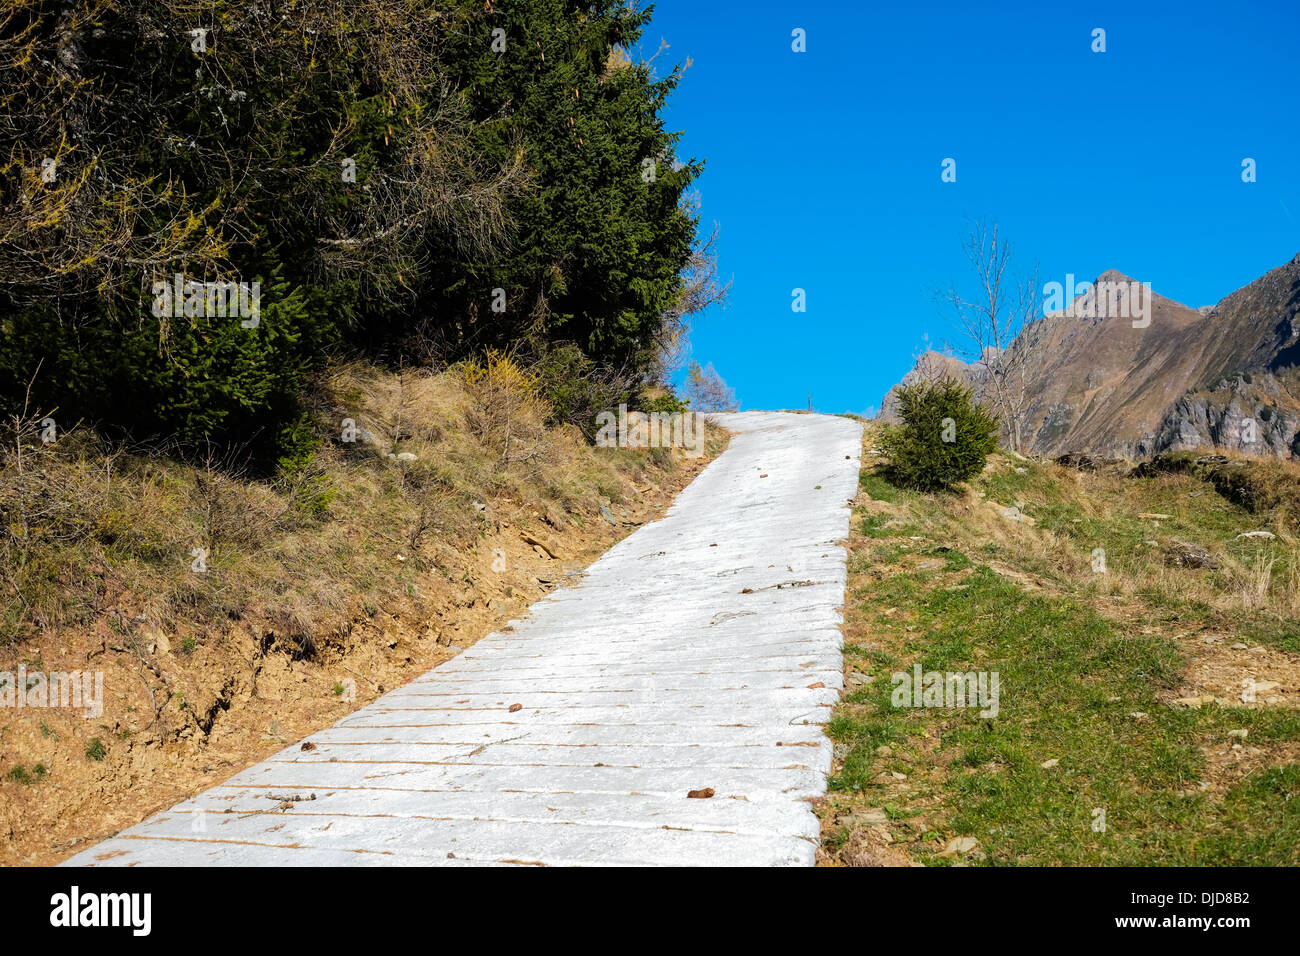 Mountain road in Val di Scalve, Alps mountains, Italy Stock Photo